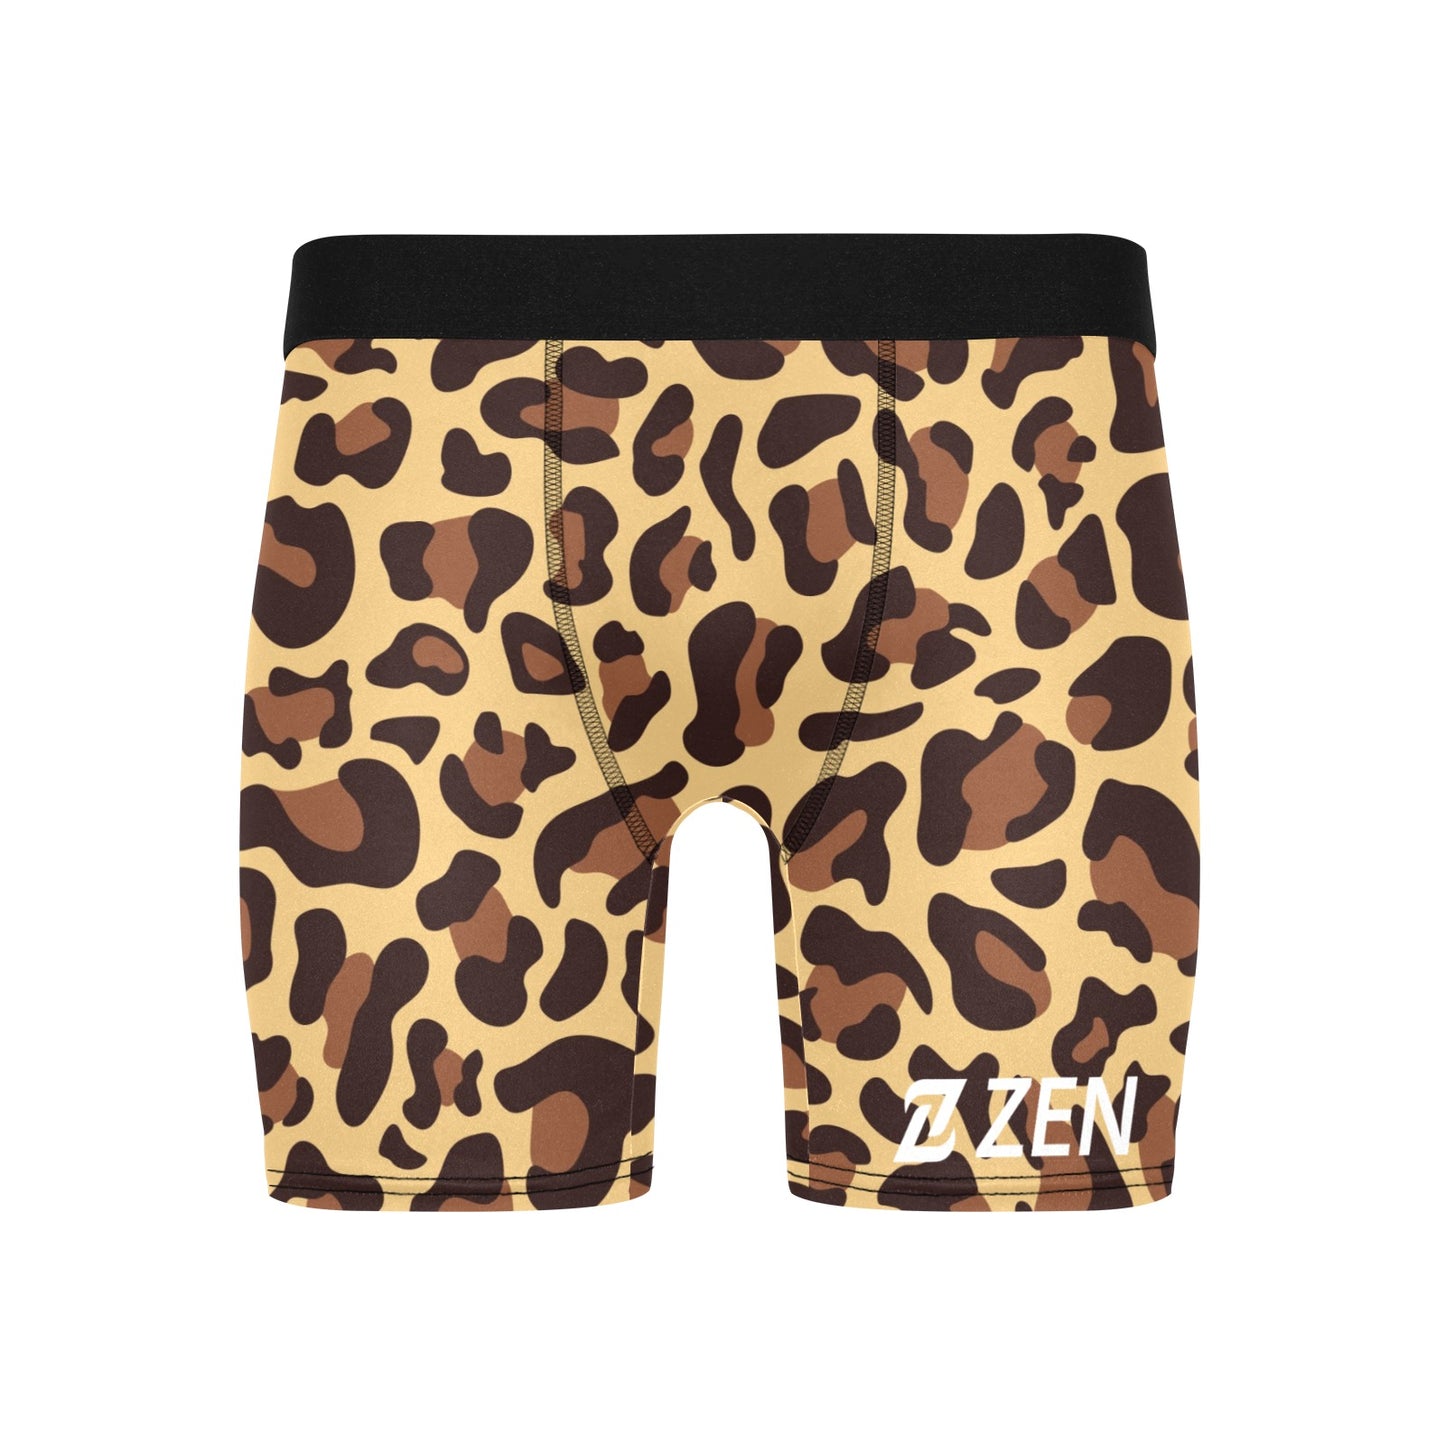 Zen Boxers Long - Leopard Print